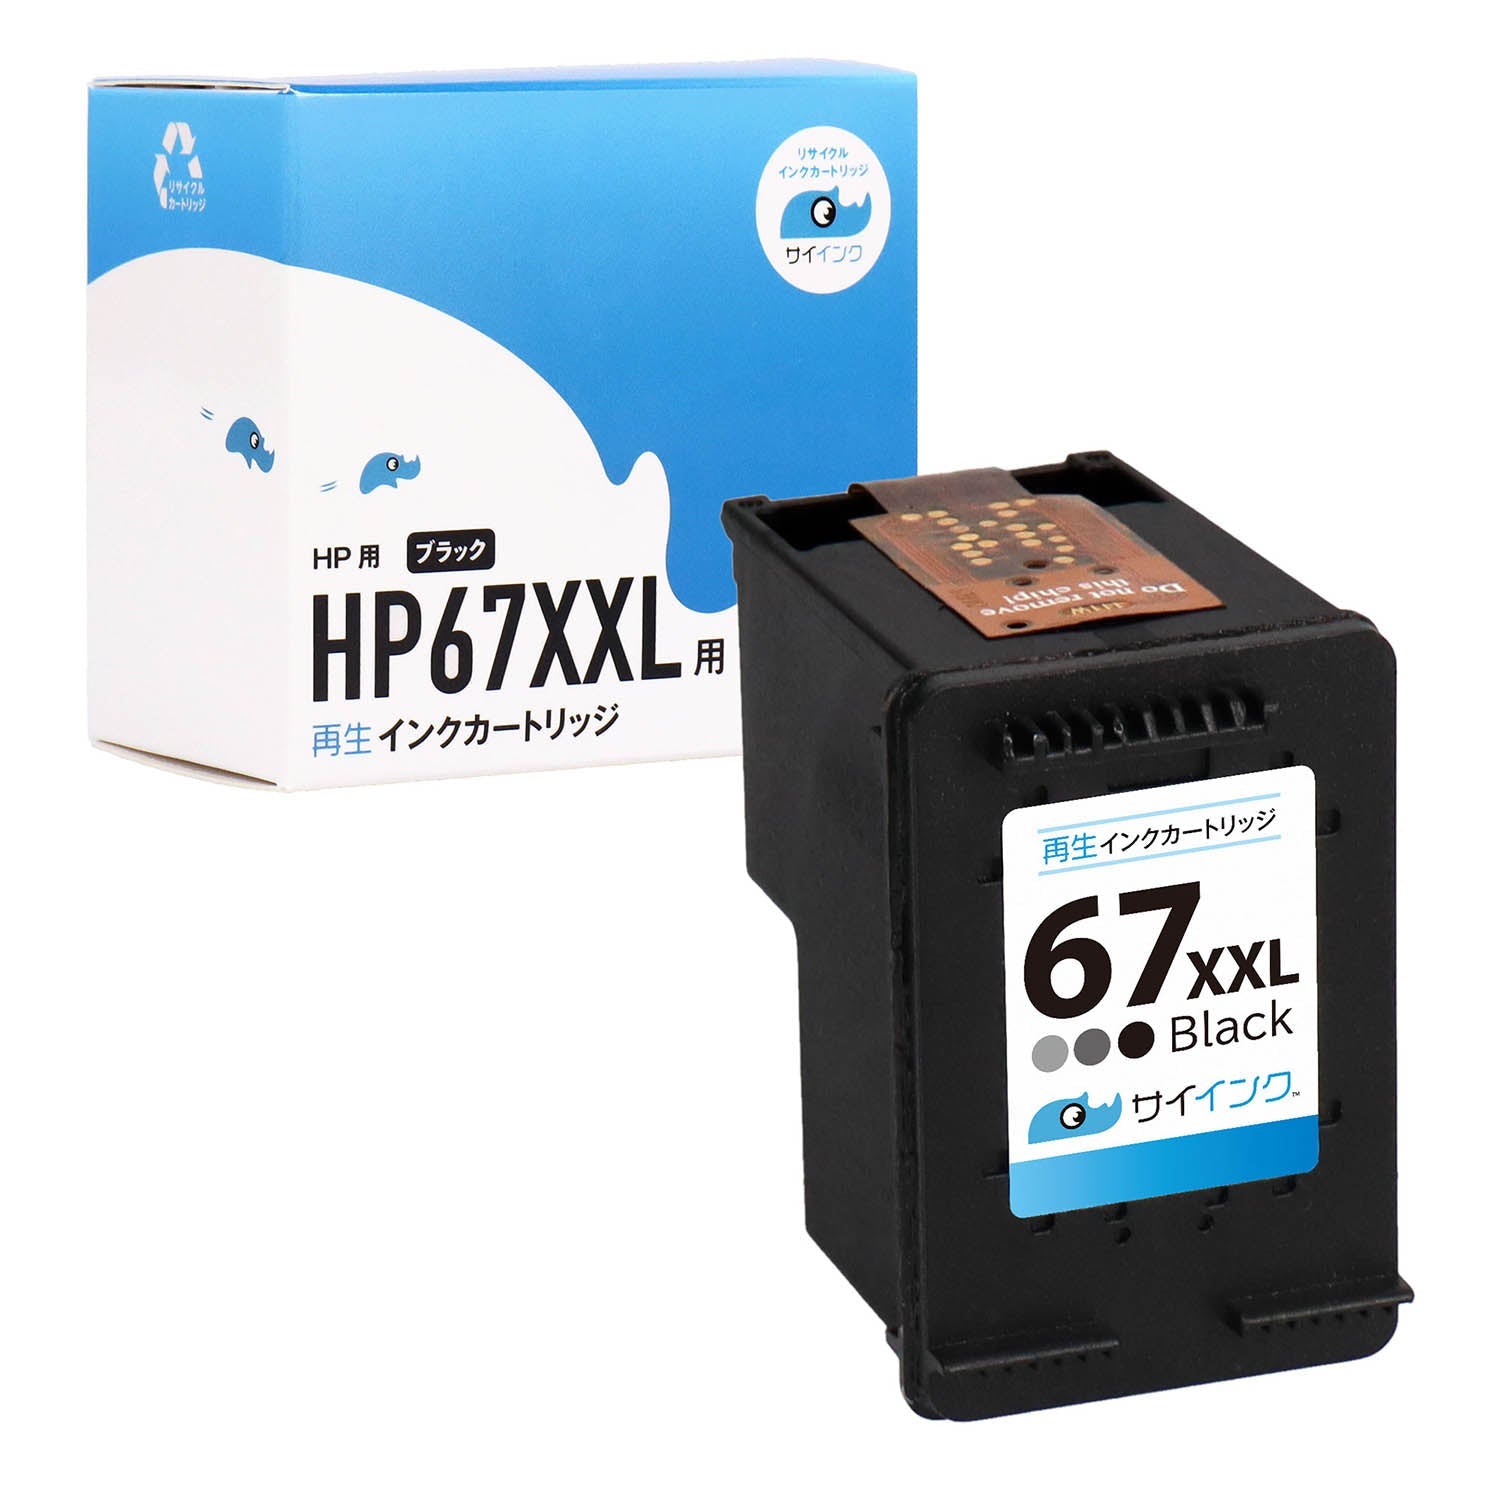 HP用 HP 67XXL リサイクルインク ブラック 増量版